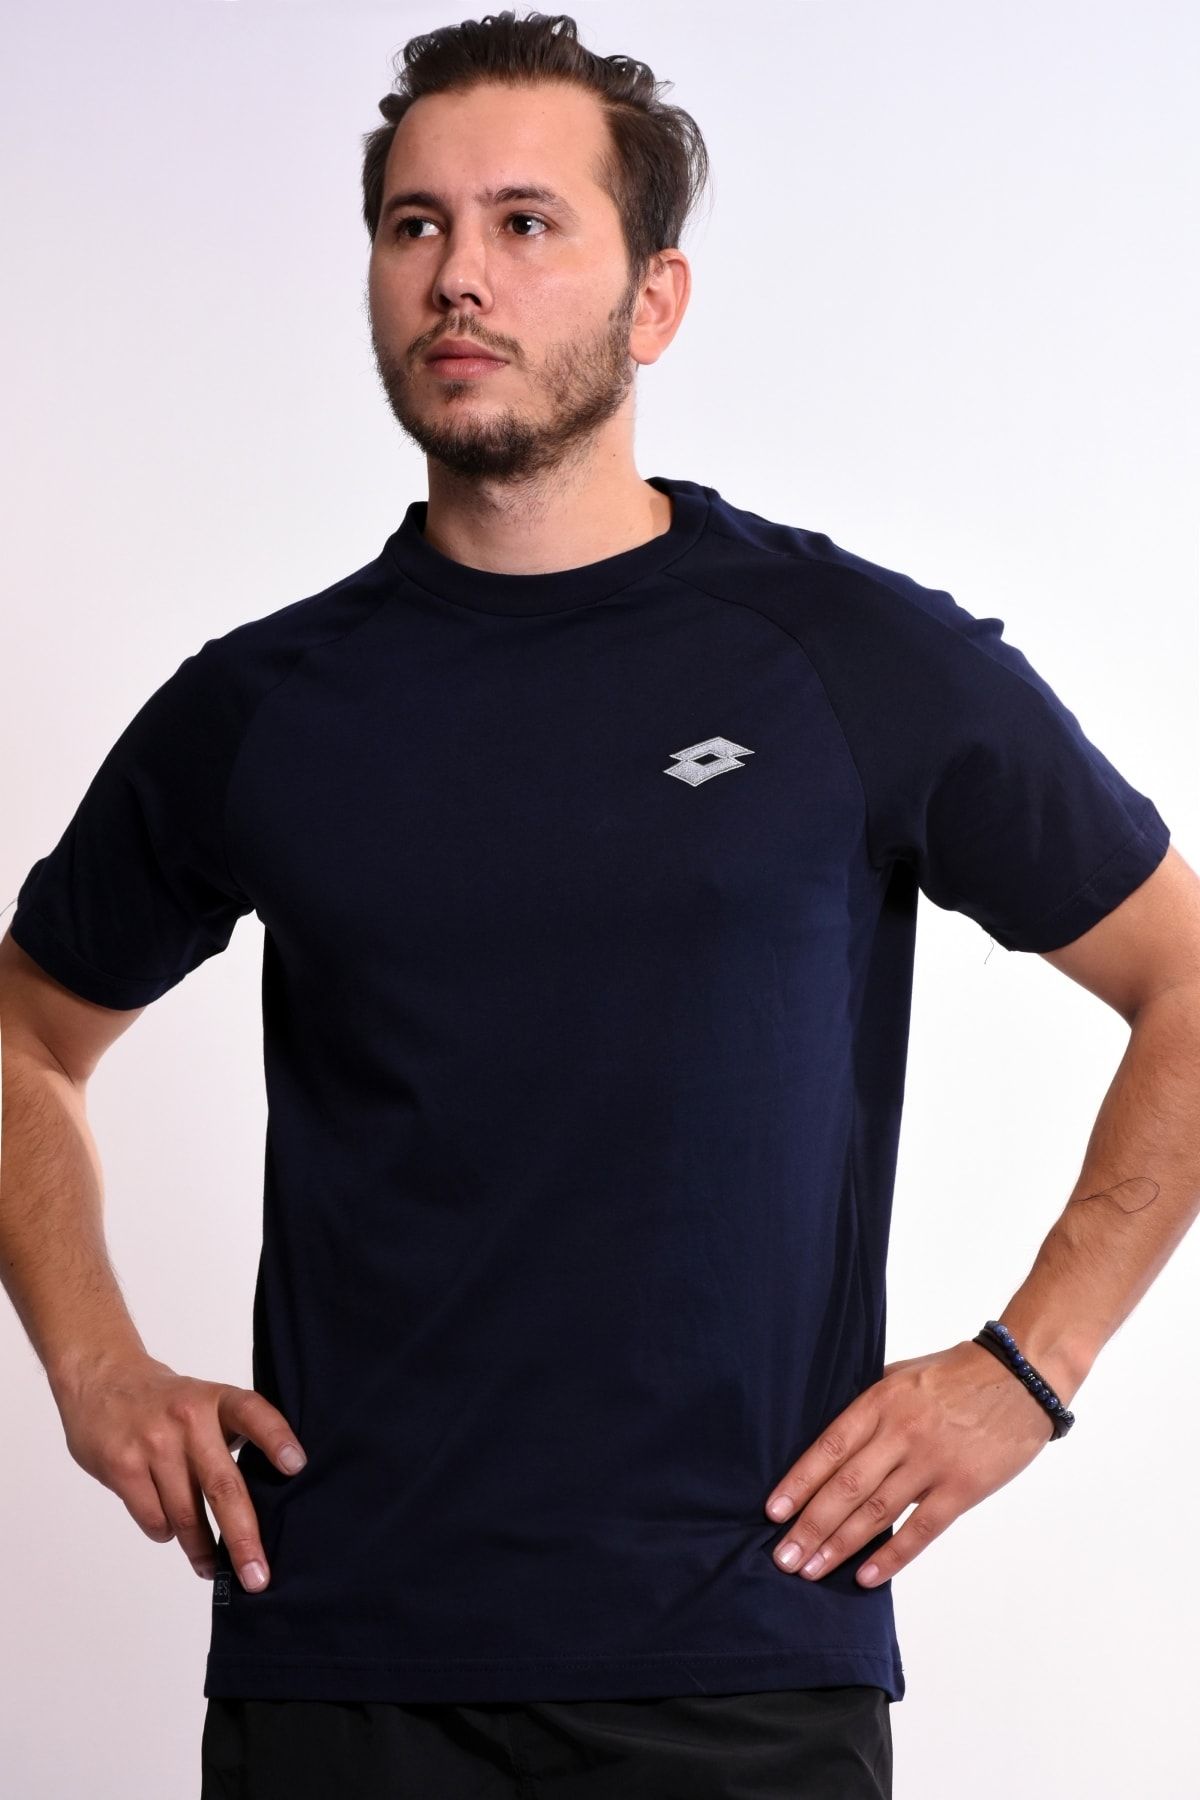 Lotto T-shirt-erkek-lacivert/gri Malange-hump Tee-r5217